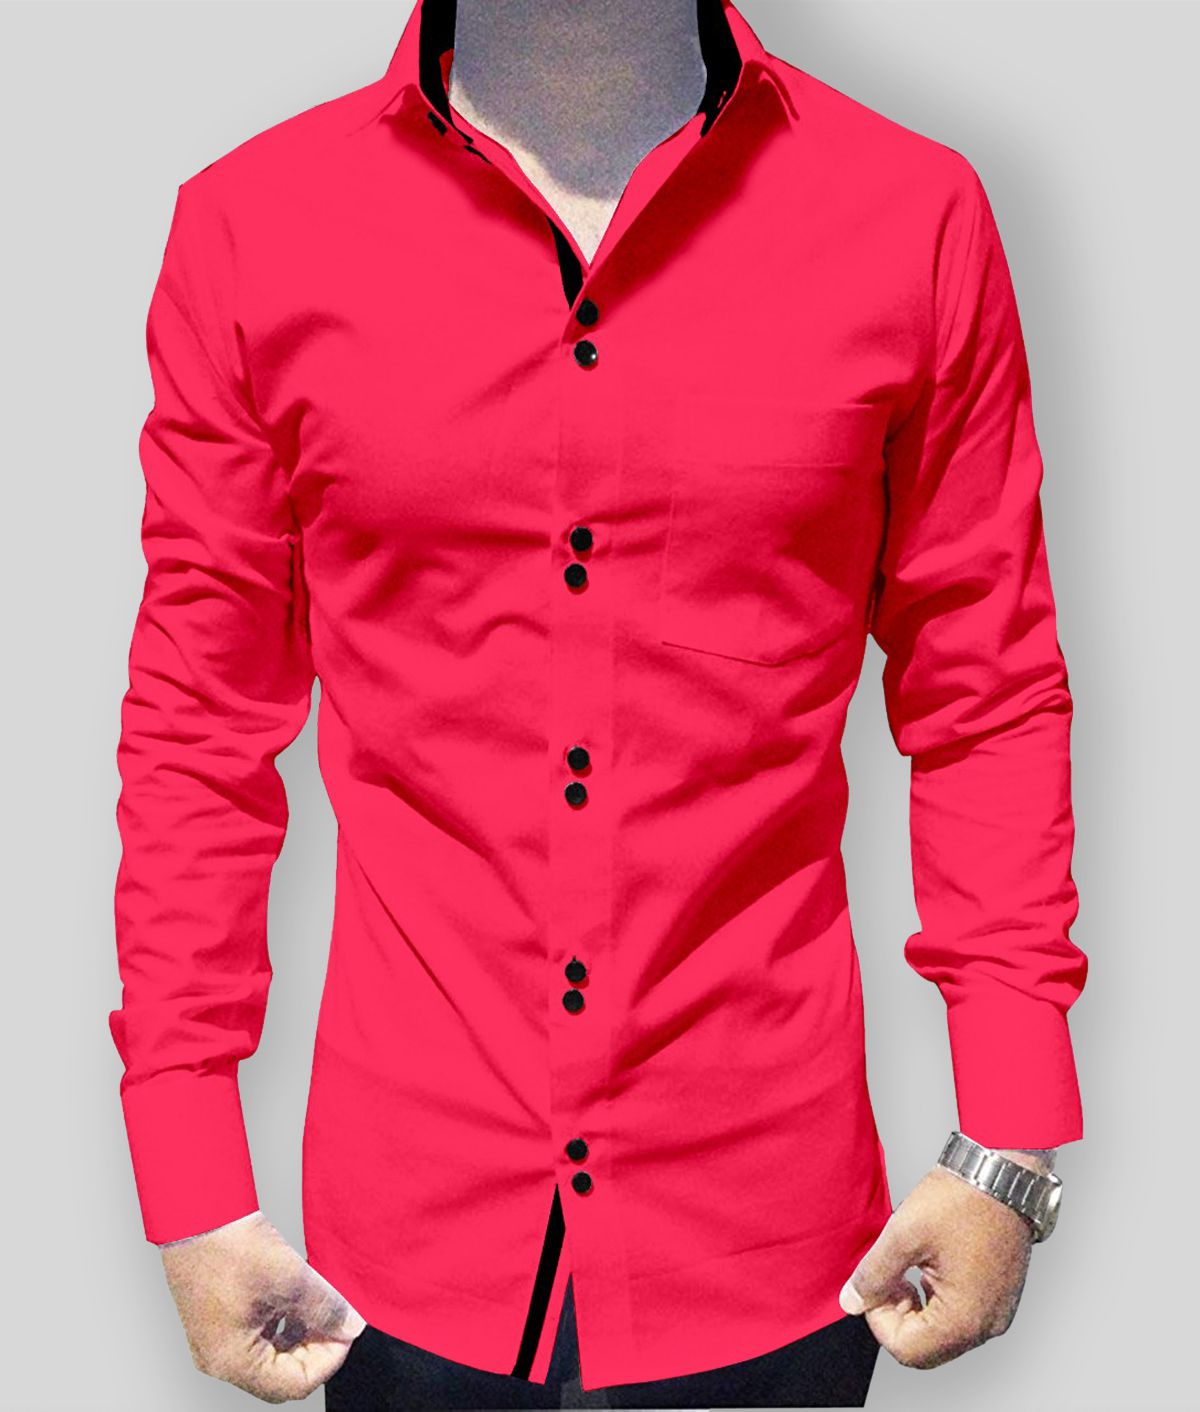 P&V - Pink Cotton Blend Slim Fit Men's Casual Shirt (Pack of 1)